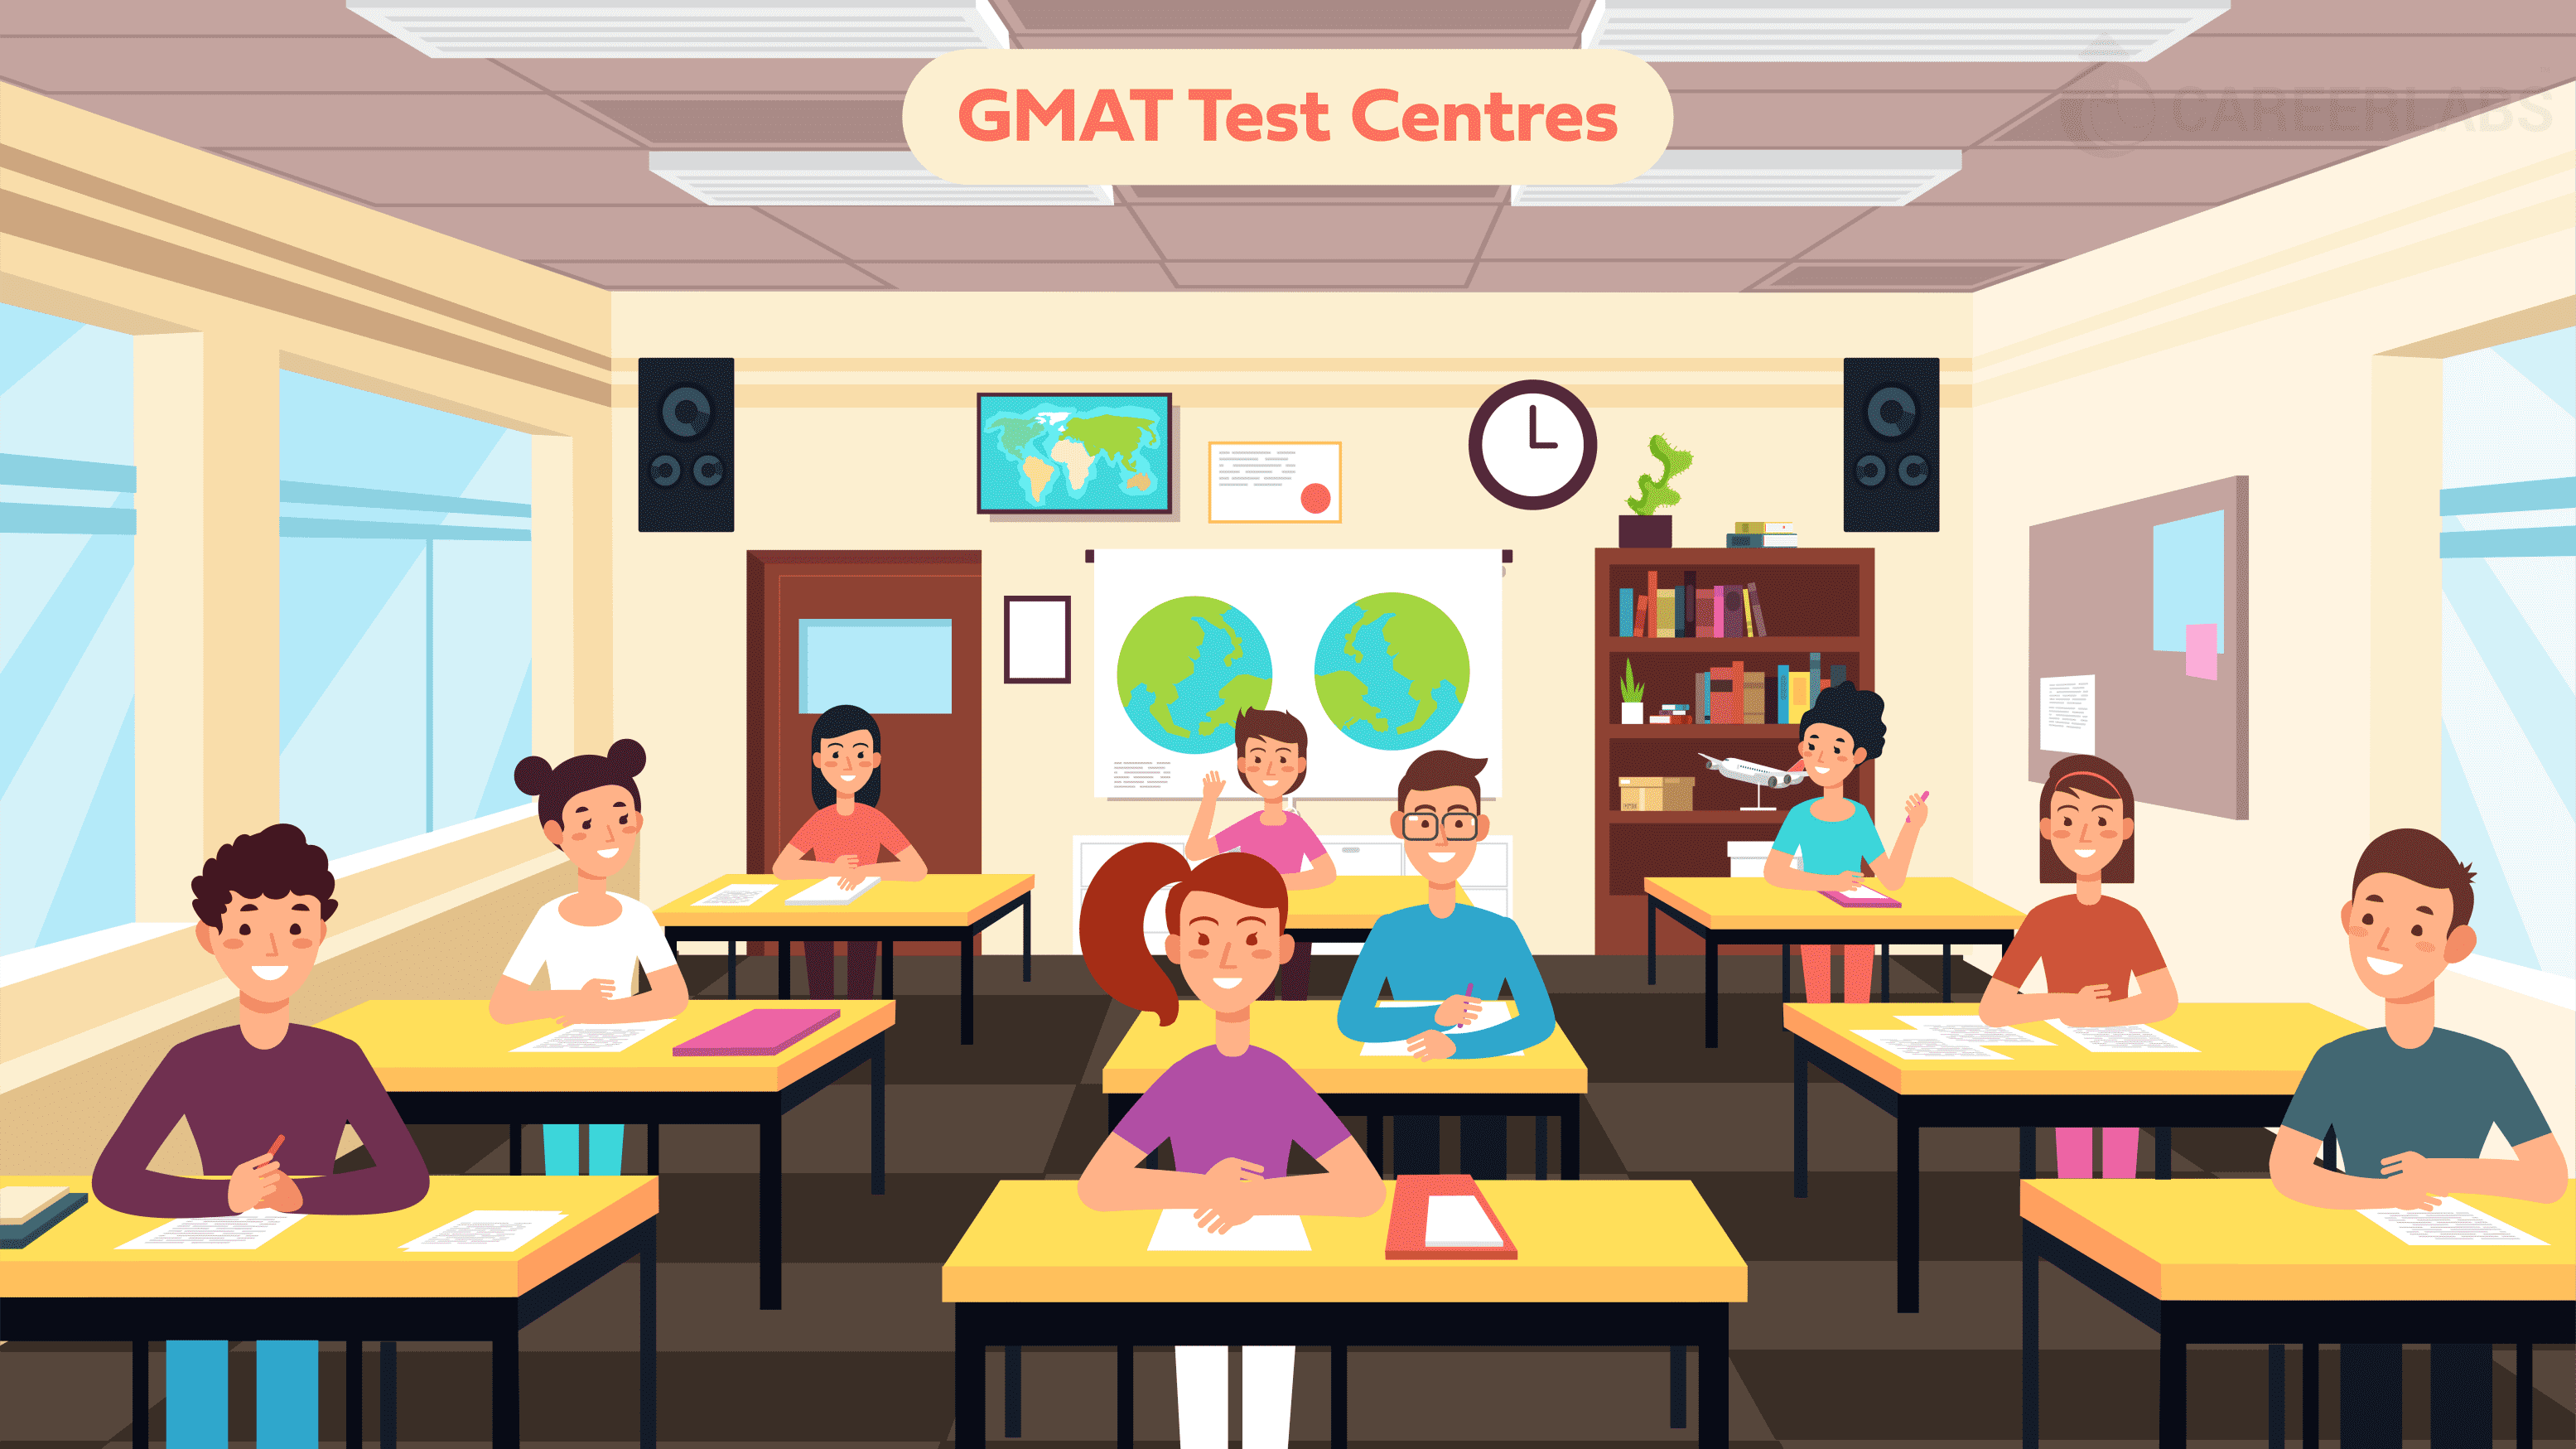 GMAT Test Centres